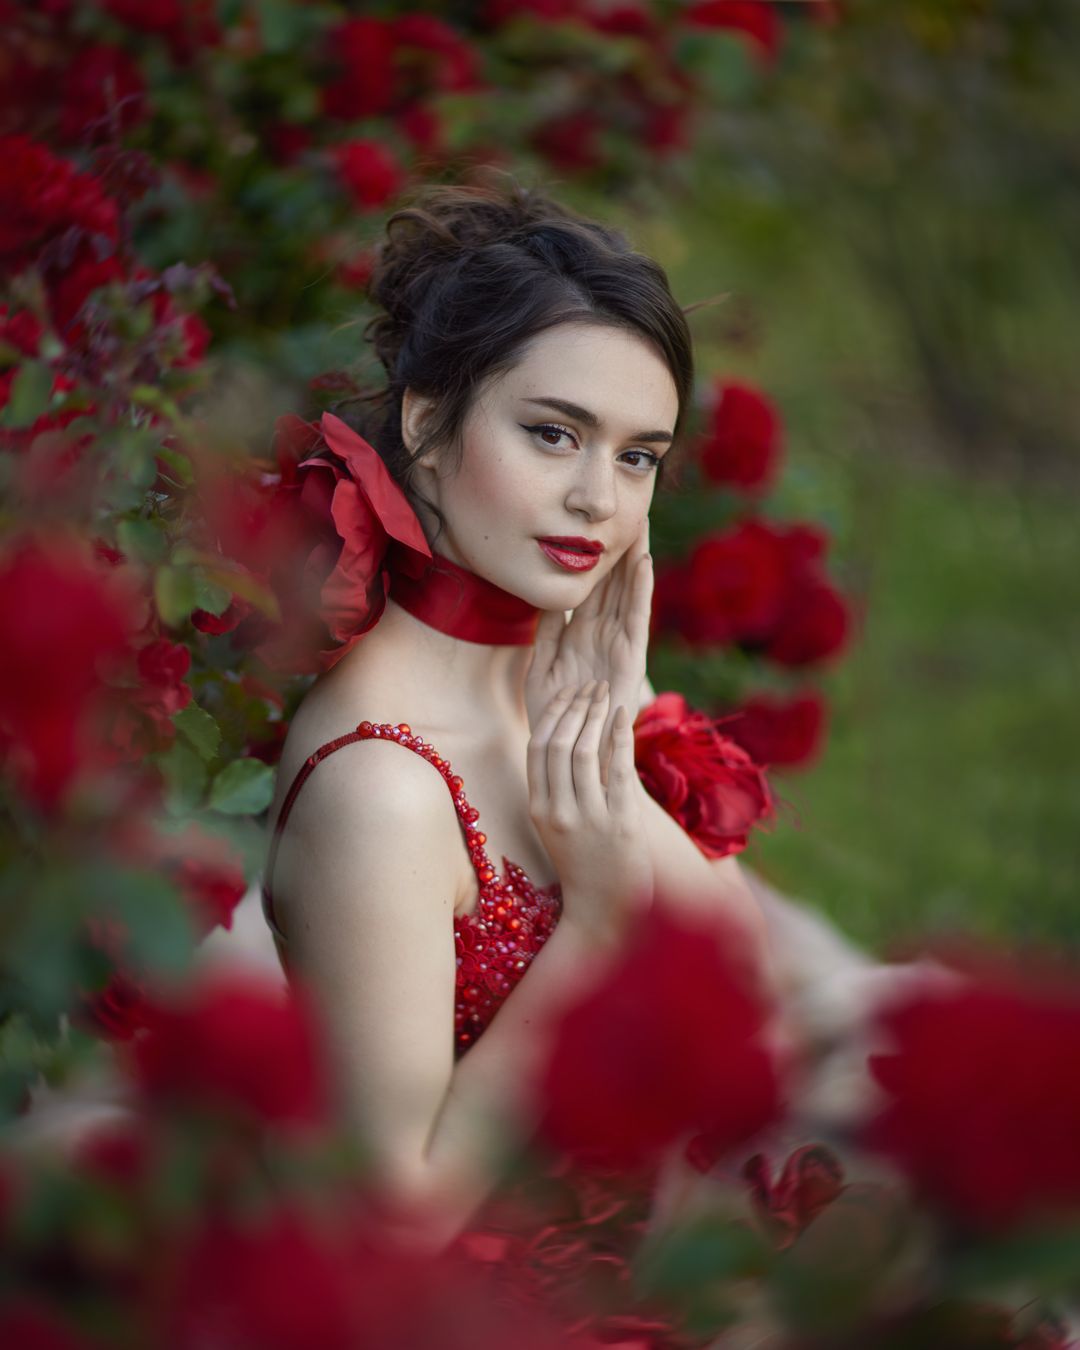 роза, цветы, девушка, пышное платье, кутюр, сад, сказка, фентези, Natalie Seitner